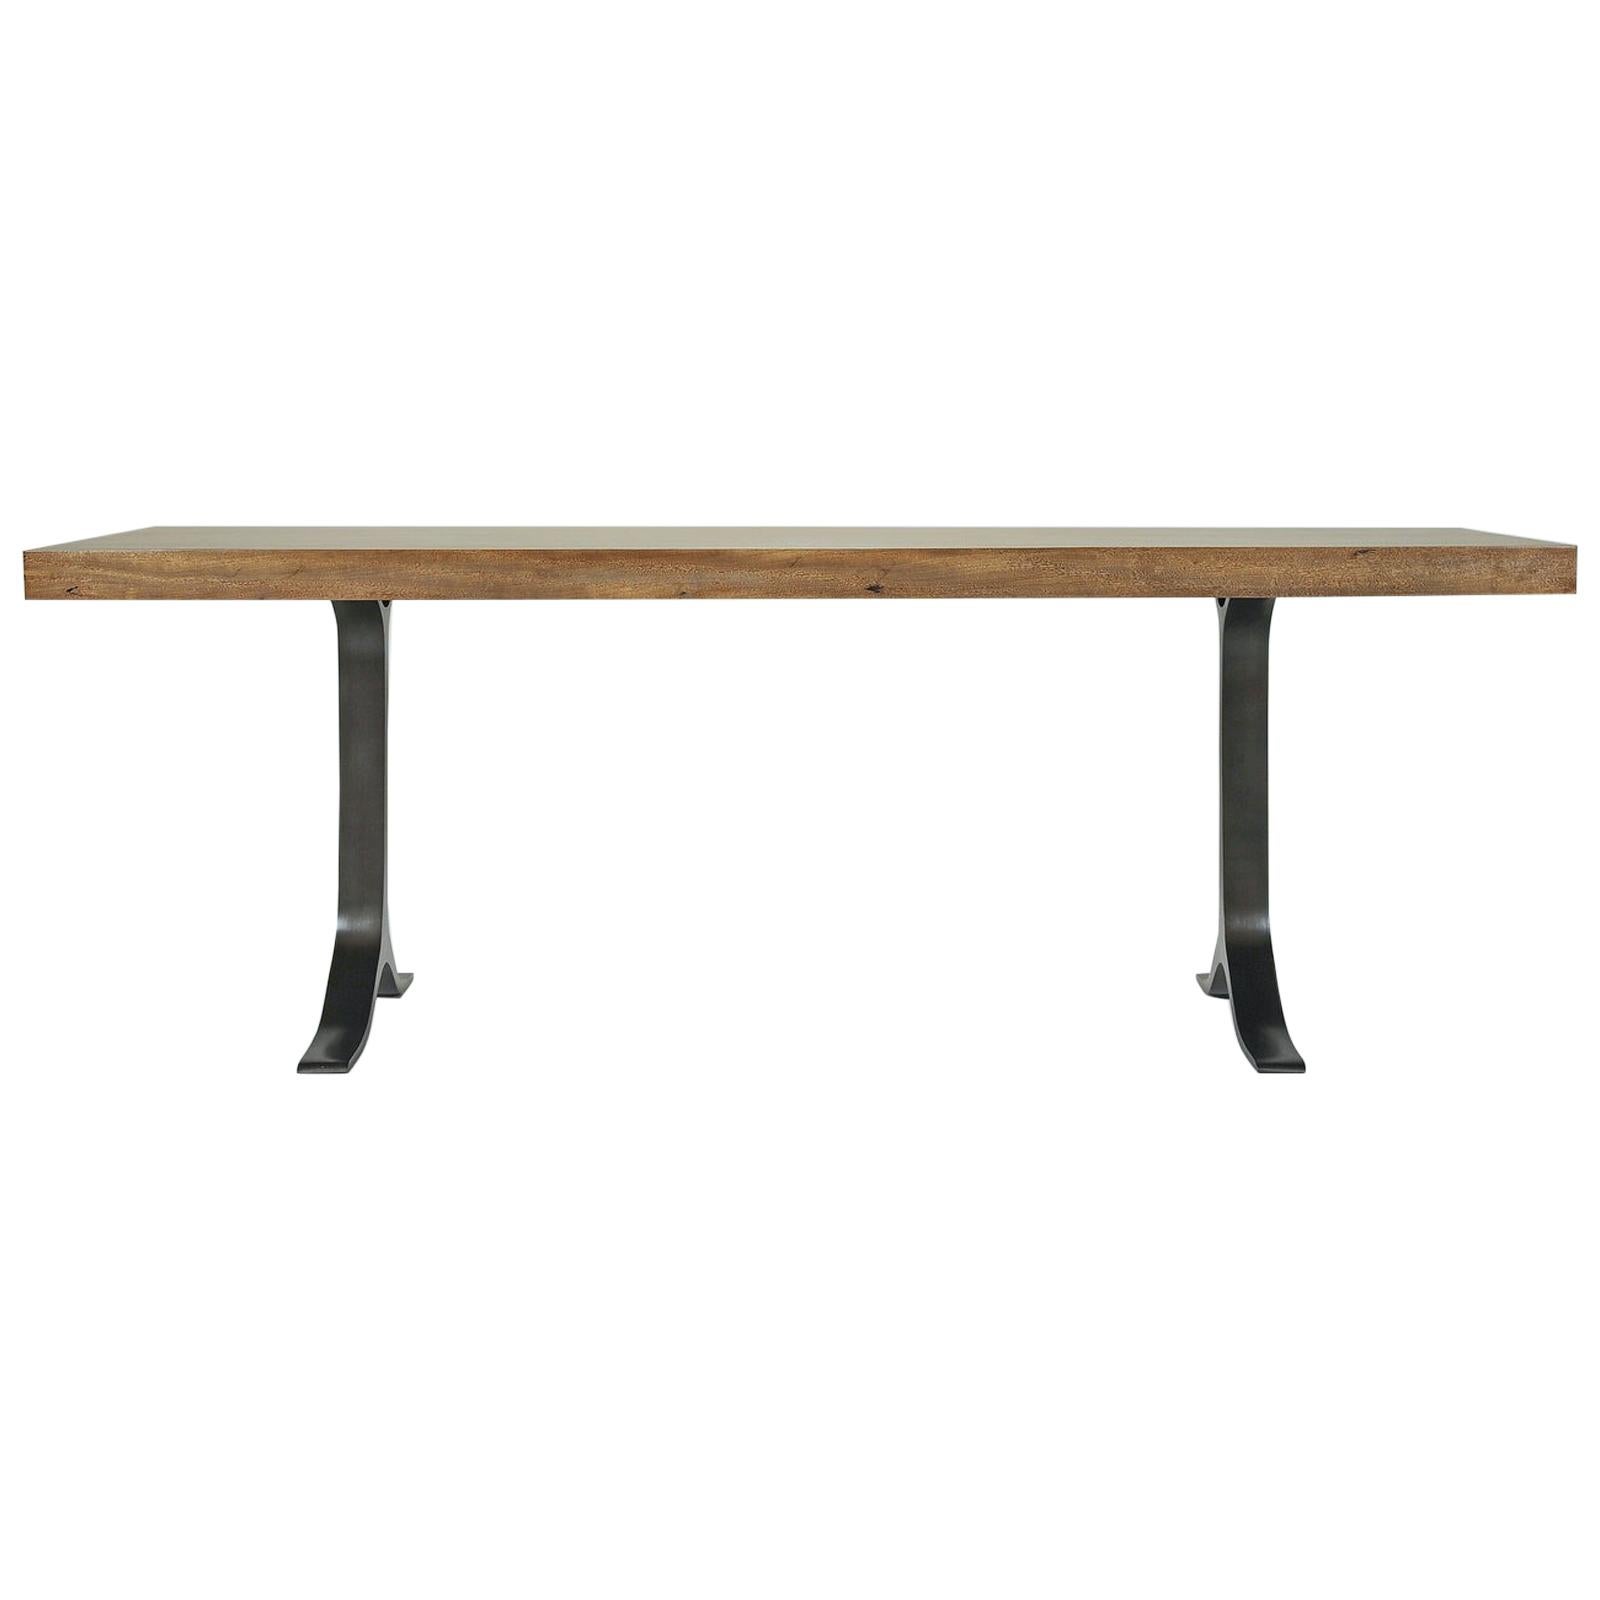 Bespoke Table, Antique Hardwood, Sand cast Aluminum Base by P. Tendercool For Sale